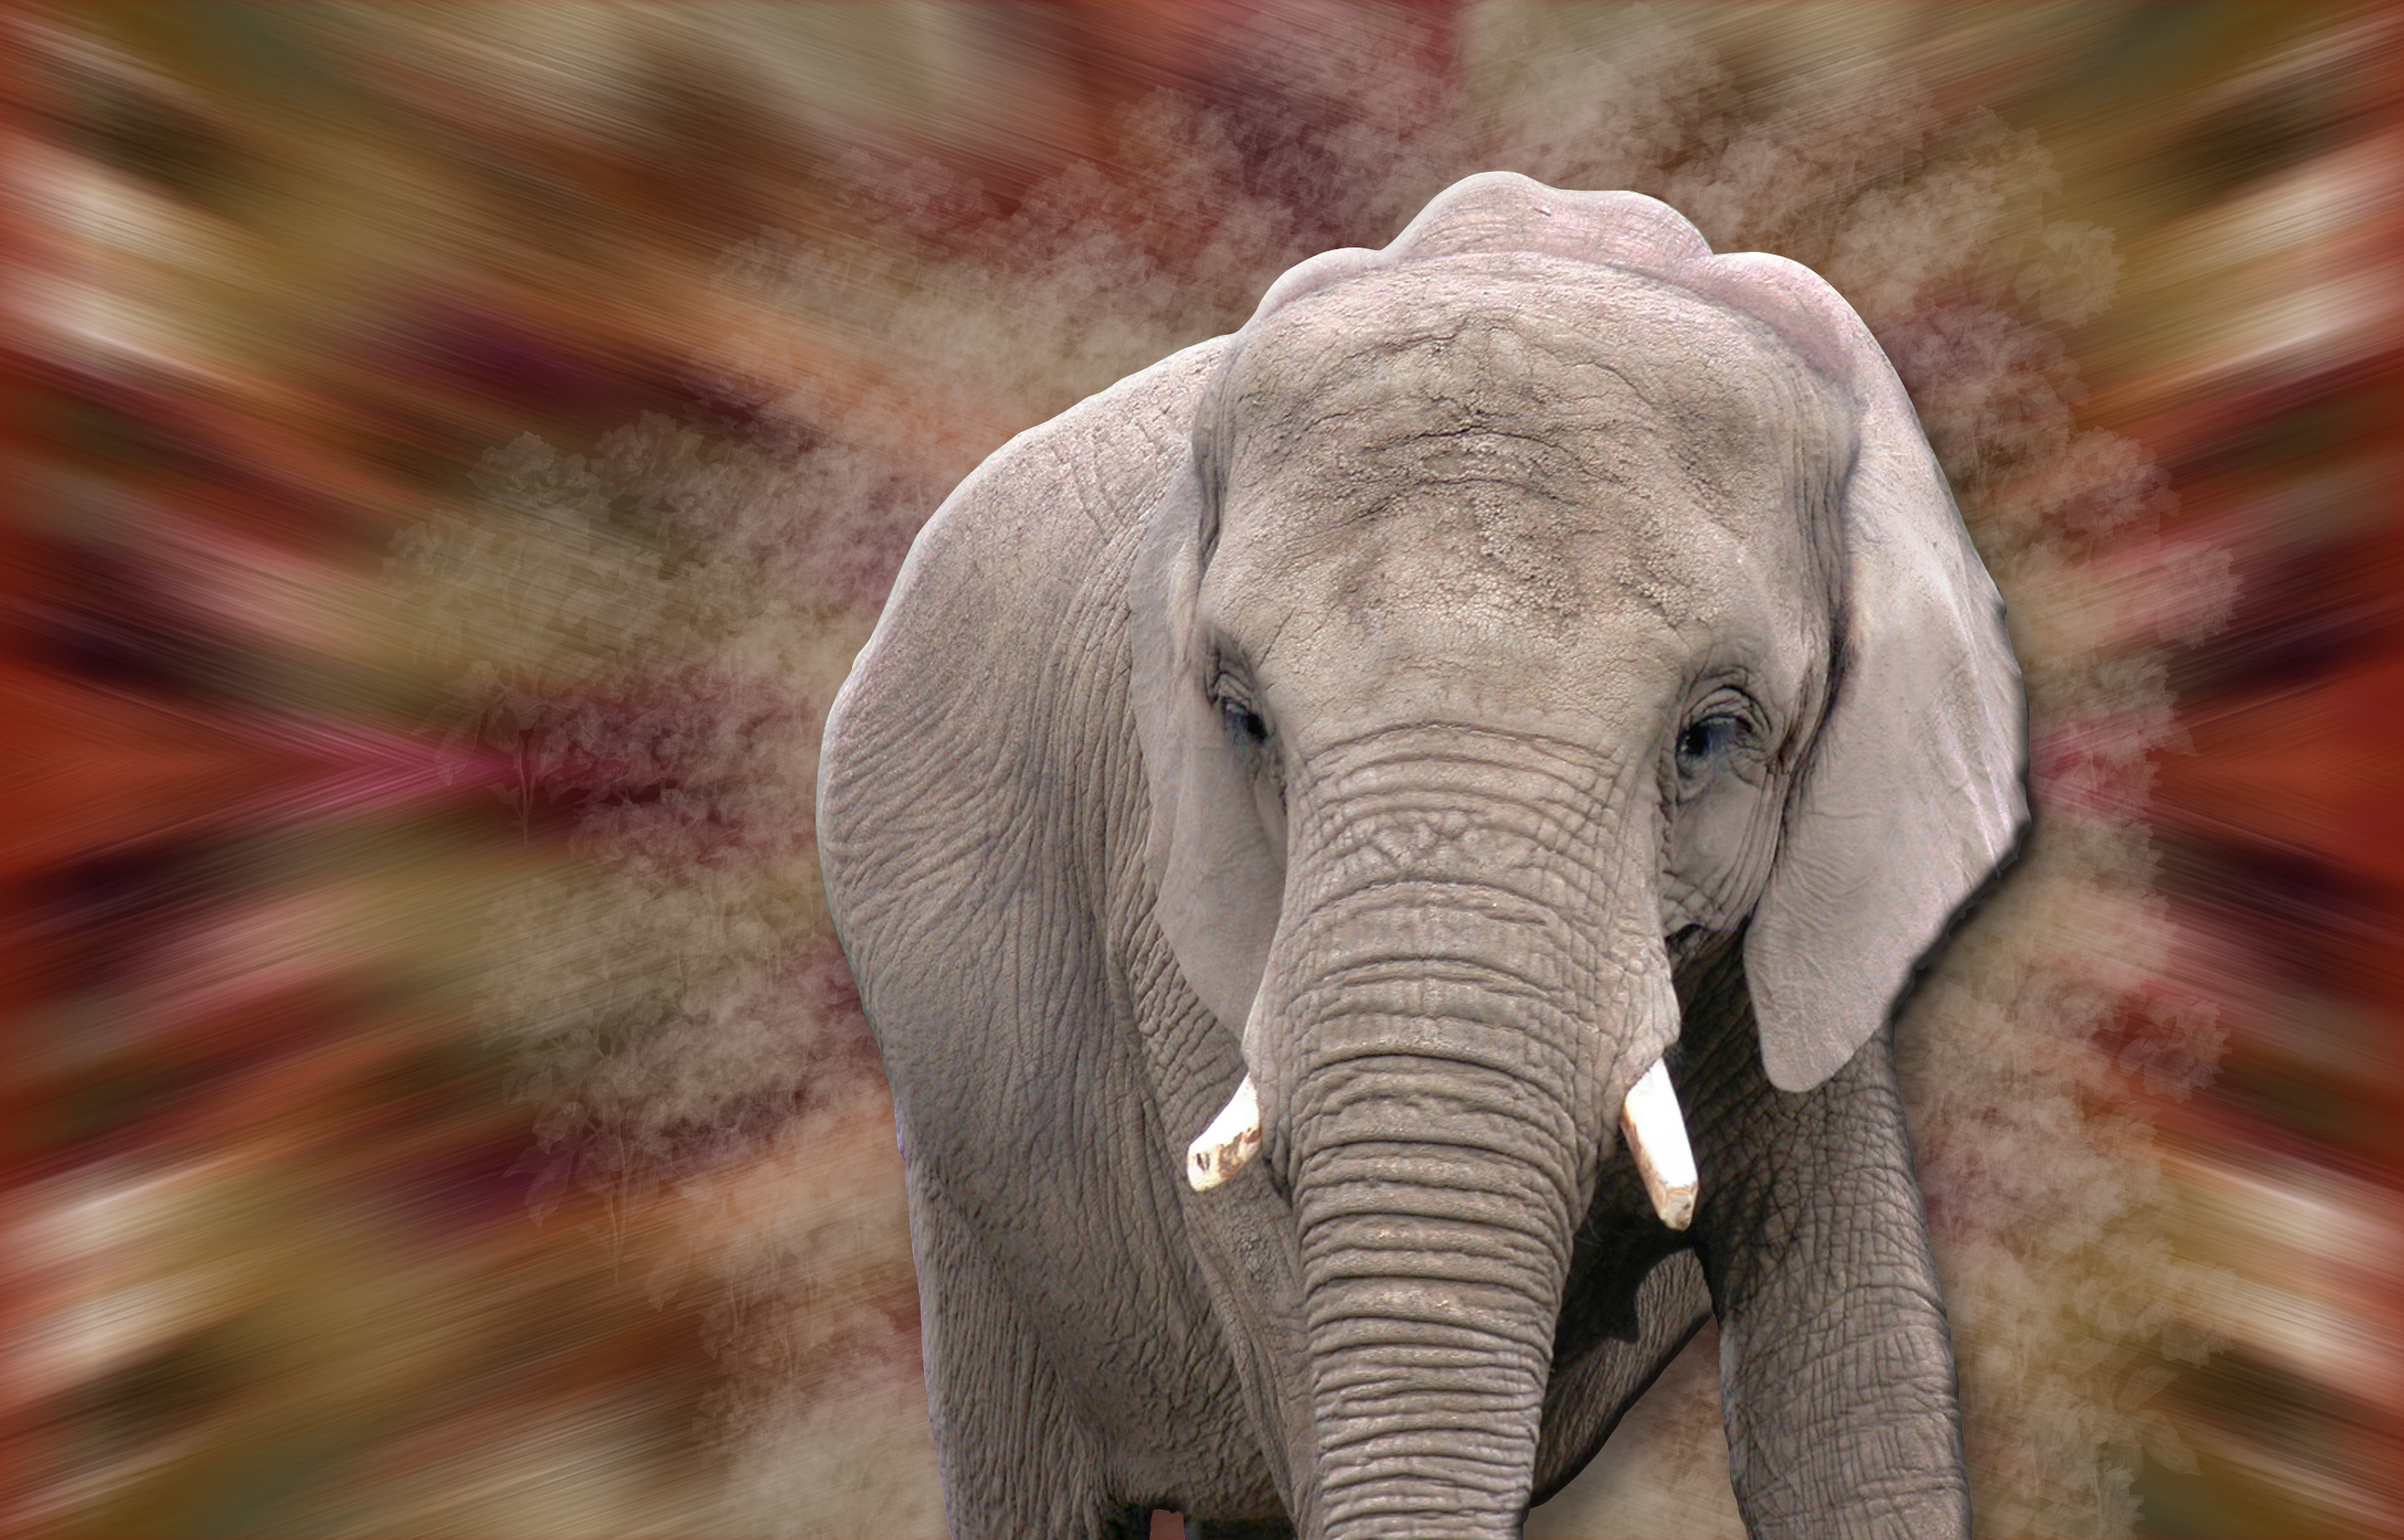  3D  elephant  HD  Wallpaper  Background Image 2700x1730 